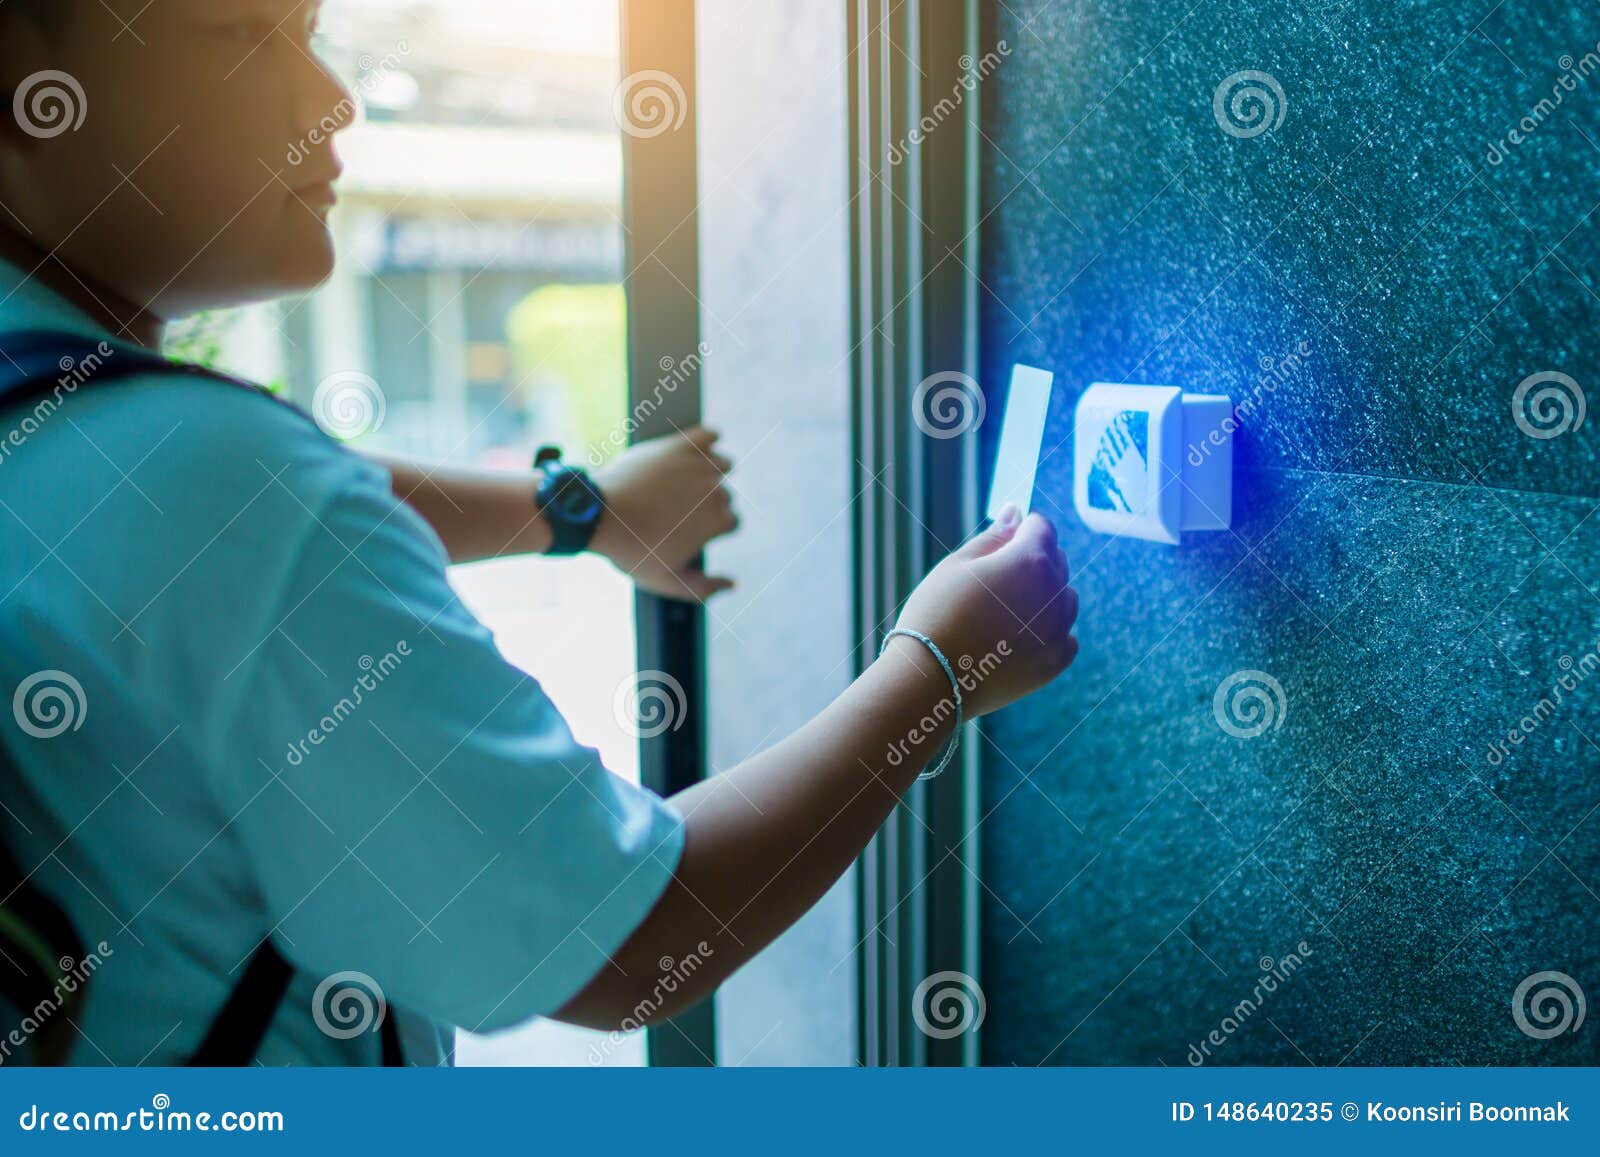 Door Access Control Boy Holding A Key Card To Lock And Unlock Door At Home Or Condominium Stock Image Image Of Alarm Access 148640235